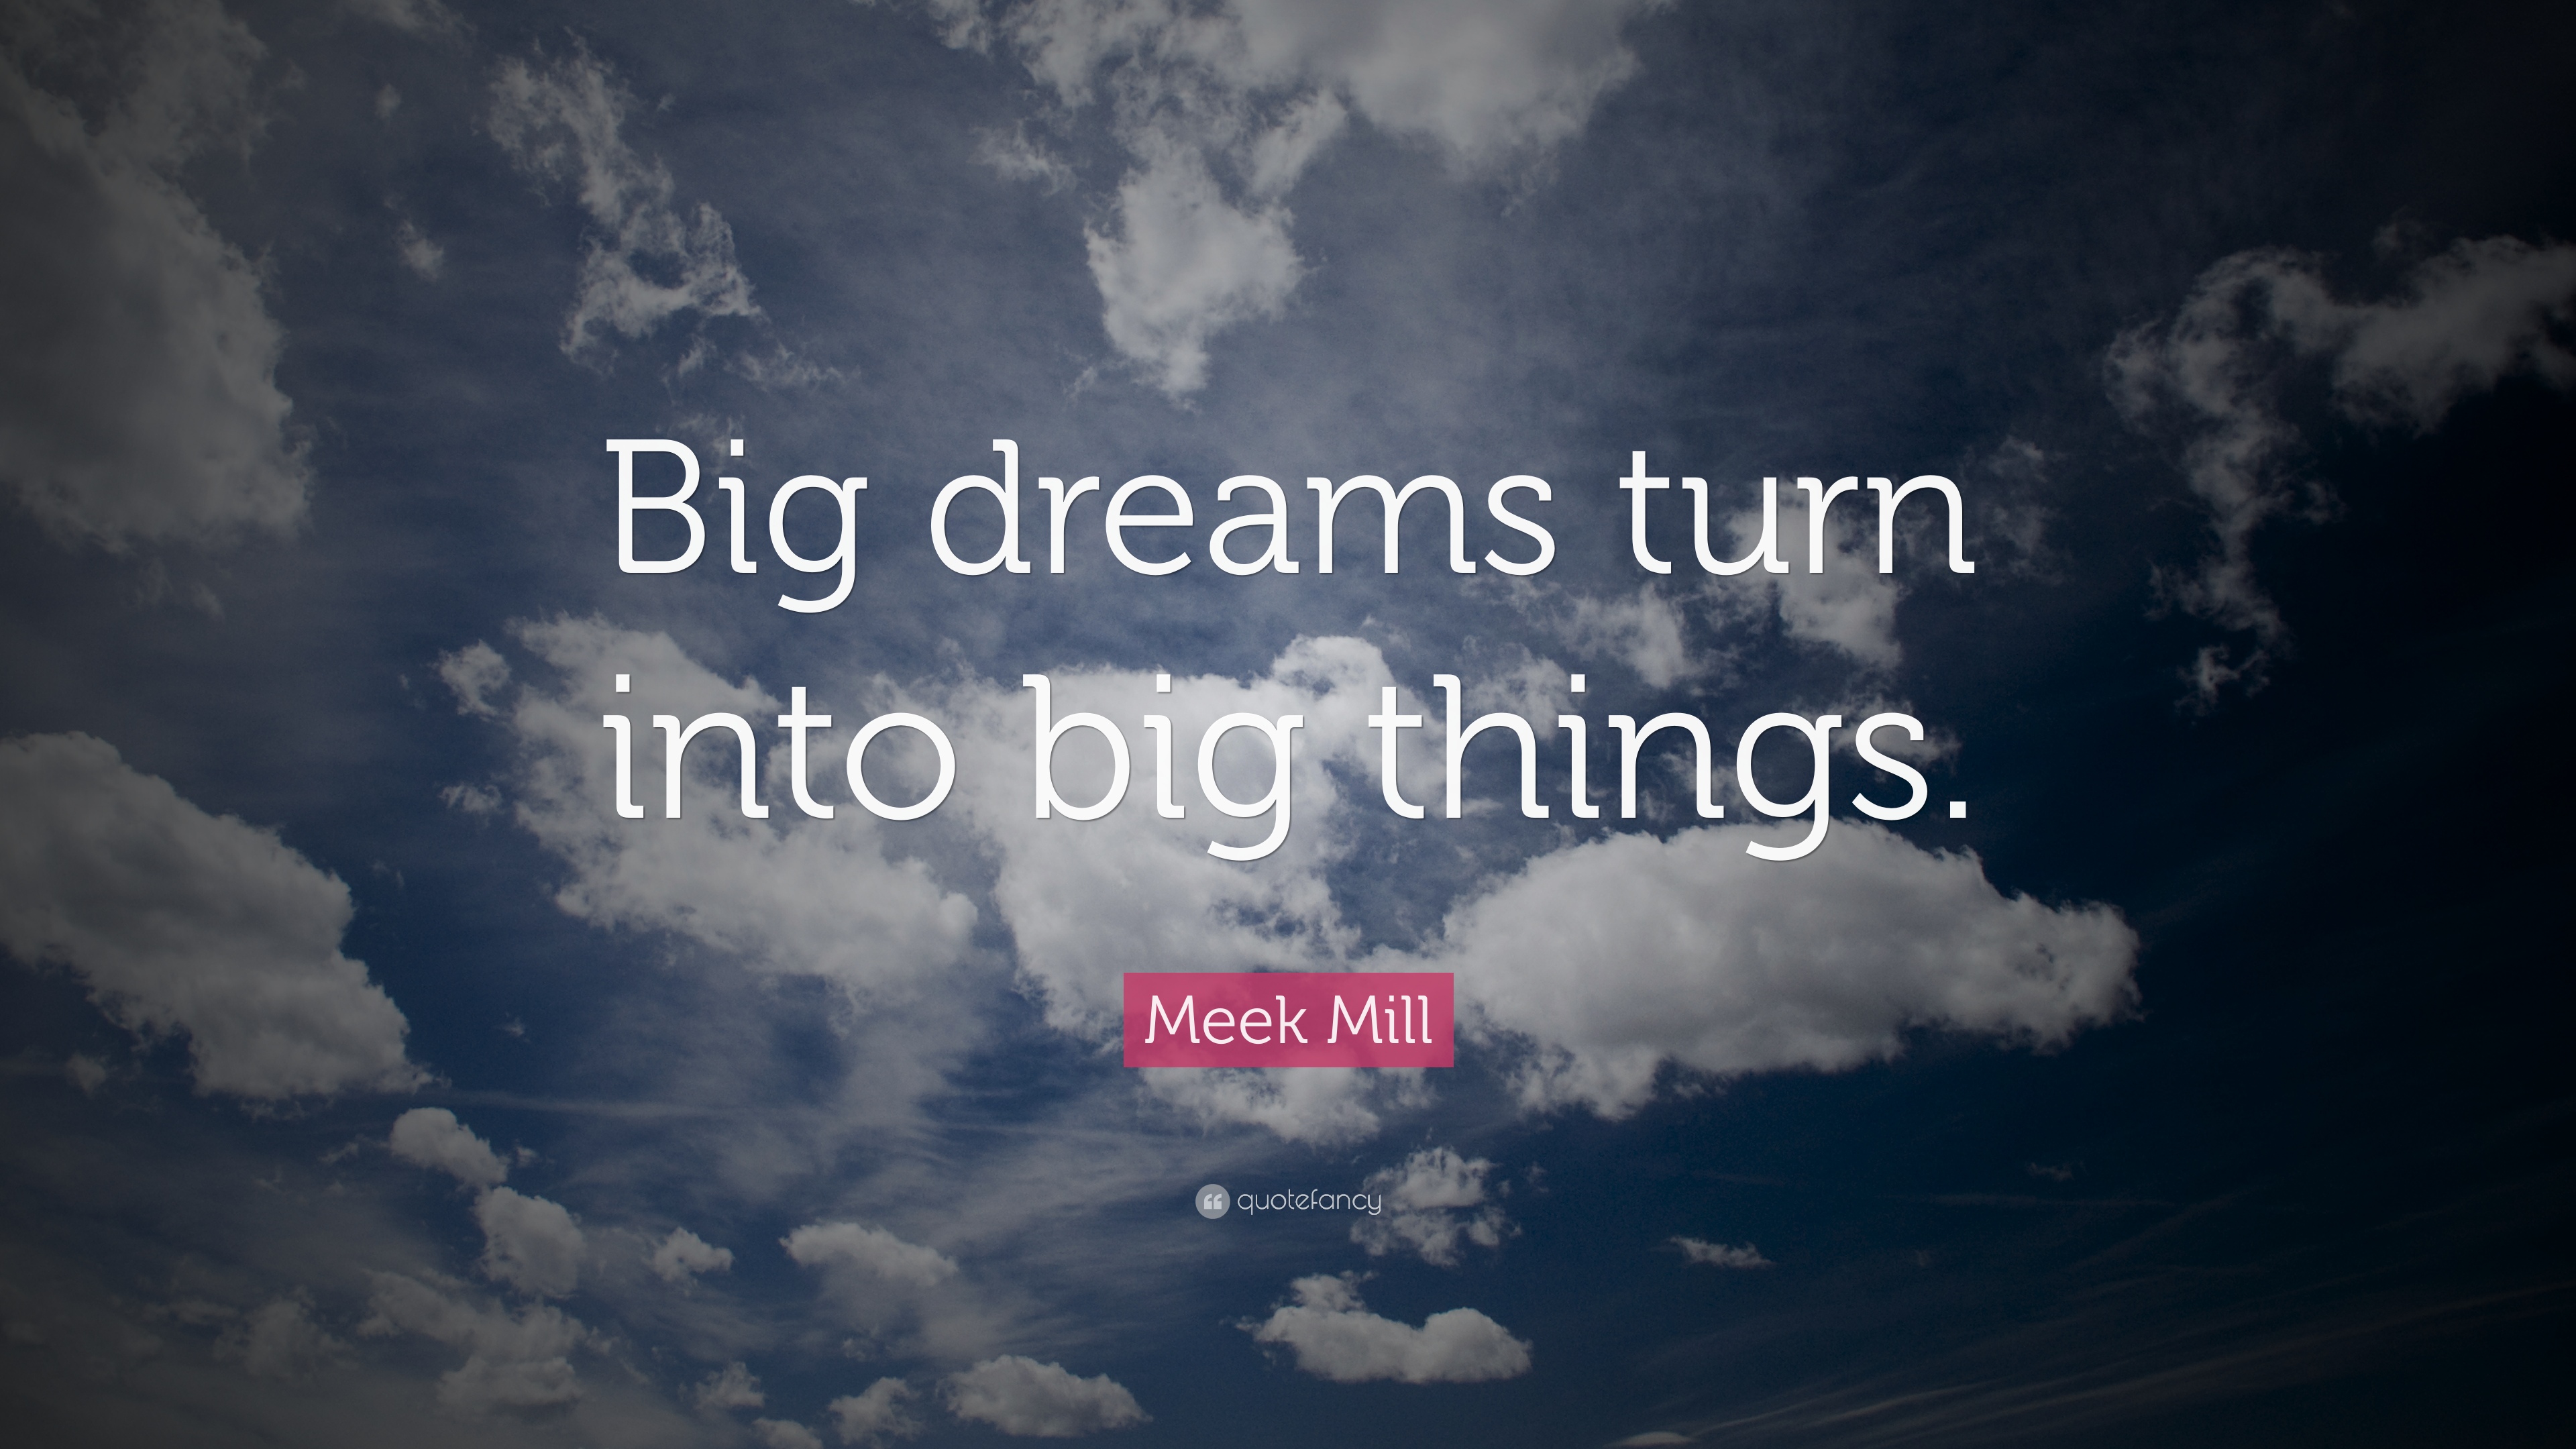 Meek Mill Quote: “Big dreams turn into big things.” 22